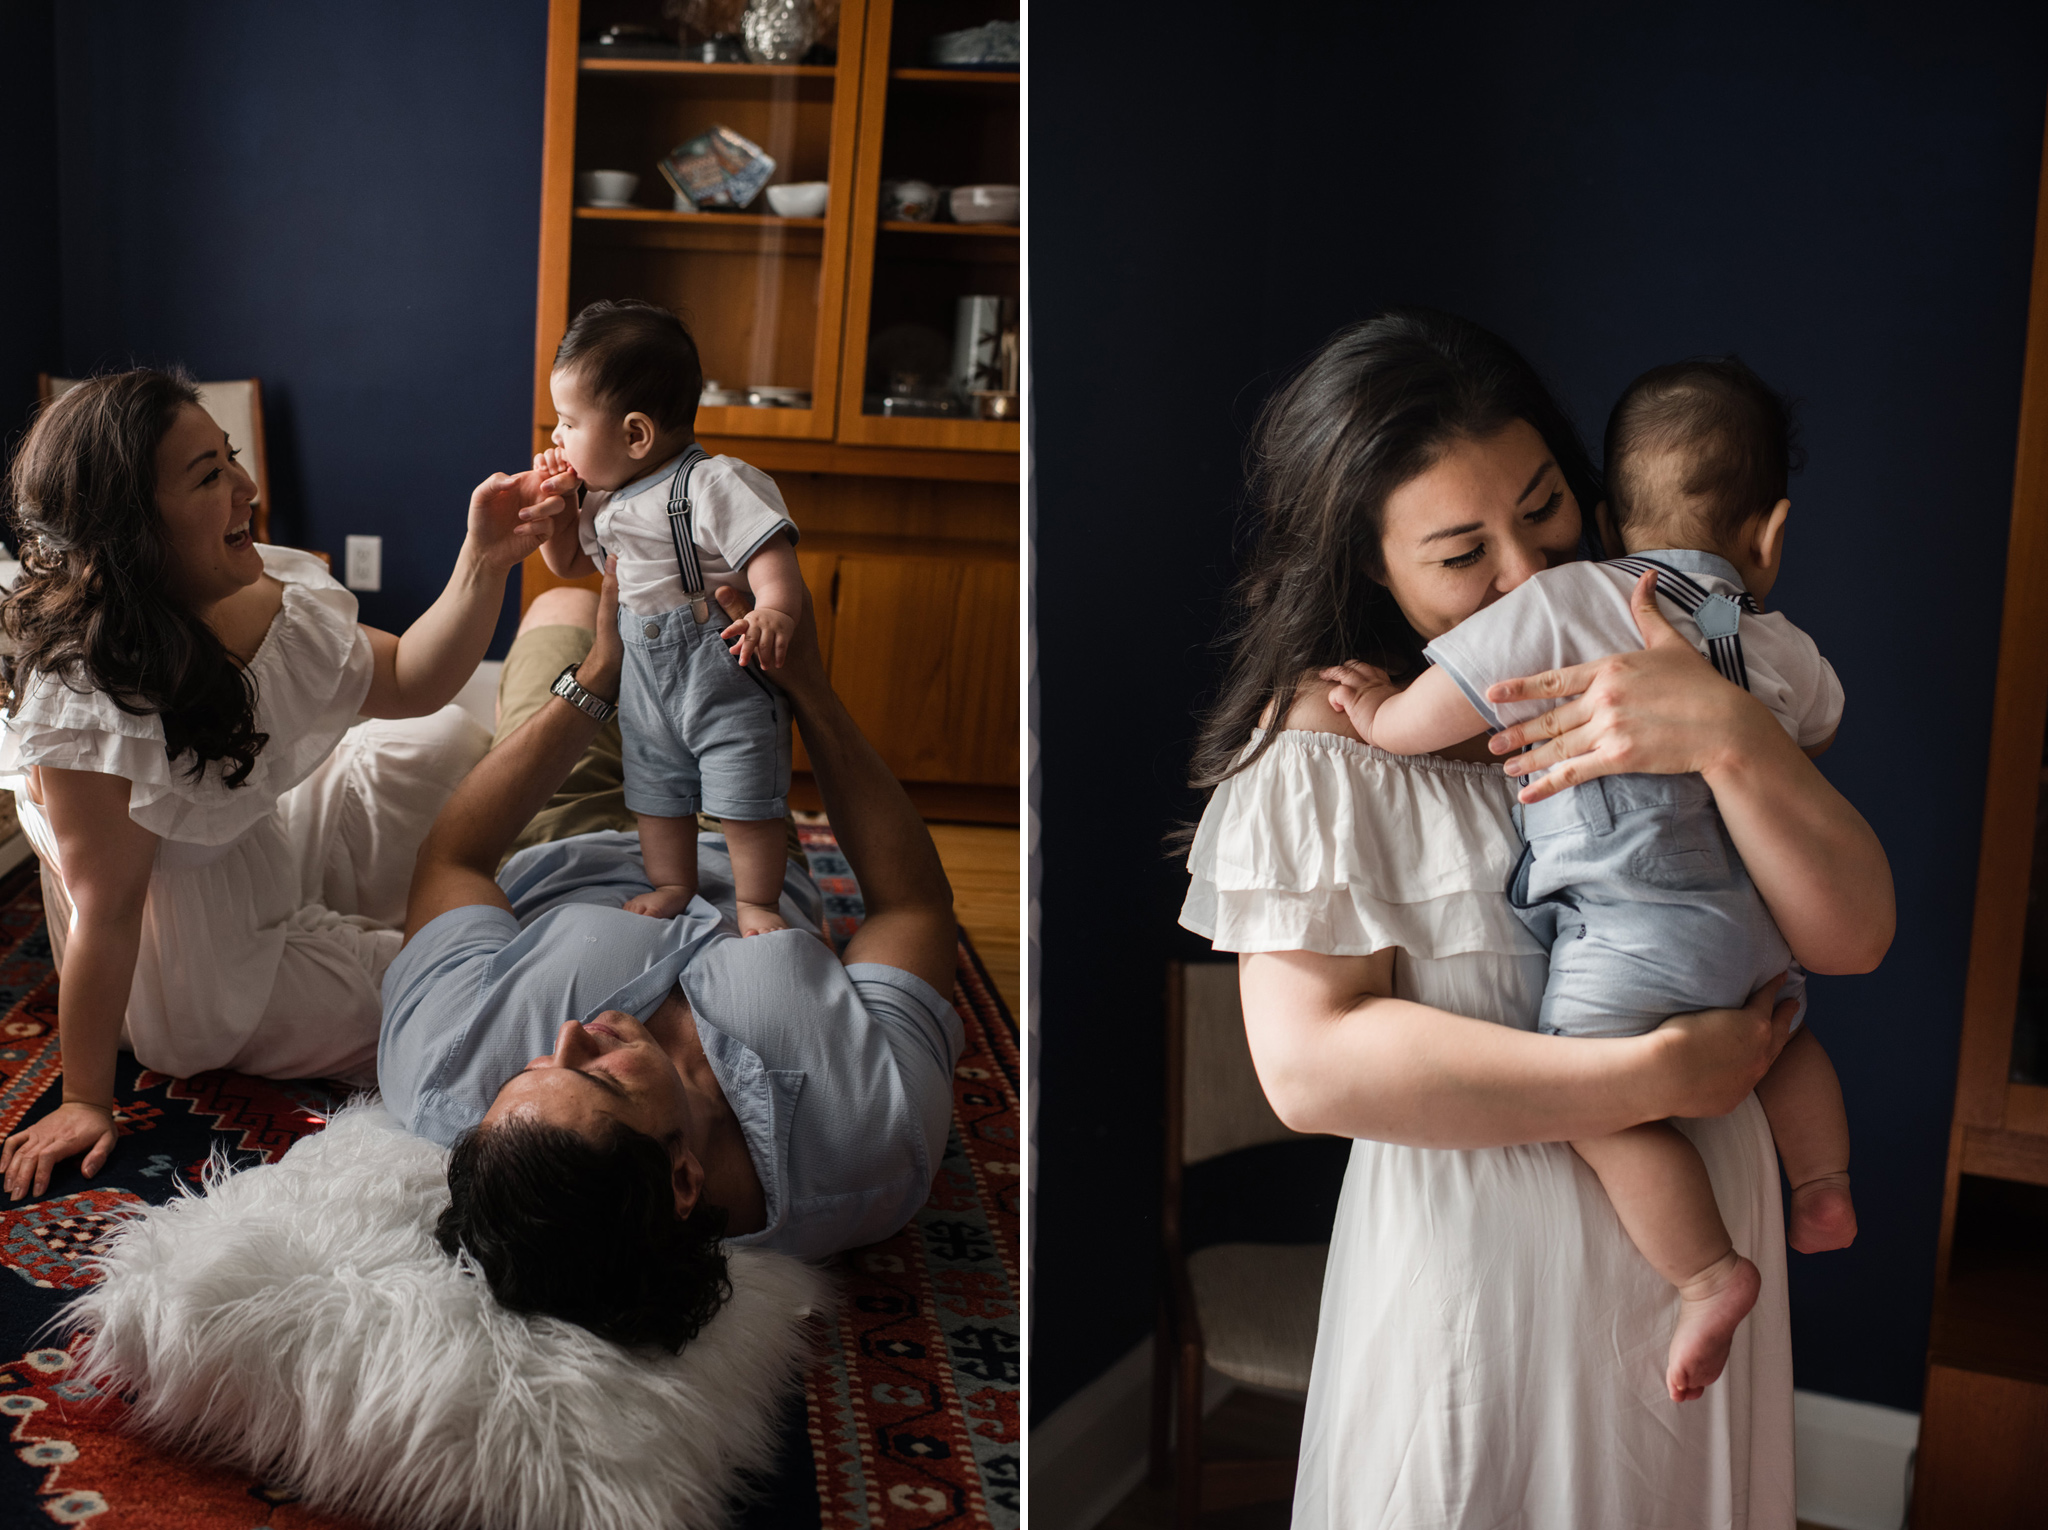 162-mom-baby-family-at-home-photoshoot.jpg